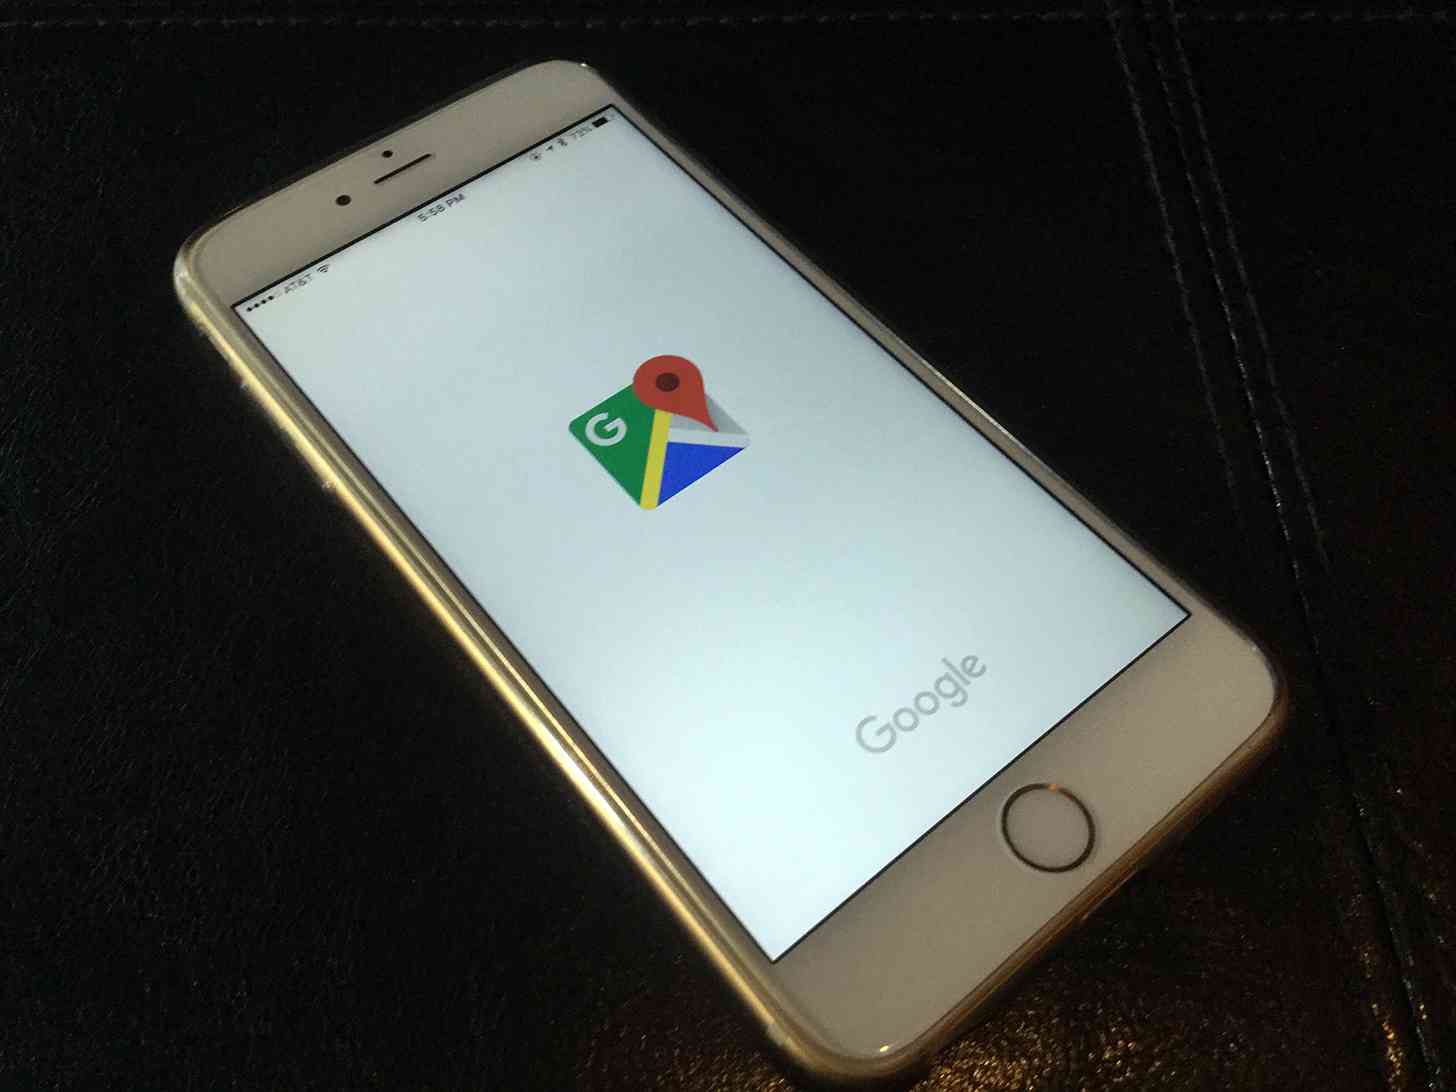 Google Maps iPhone app